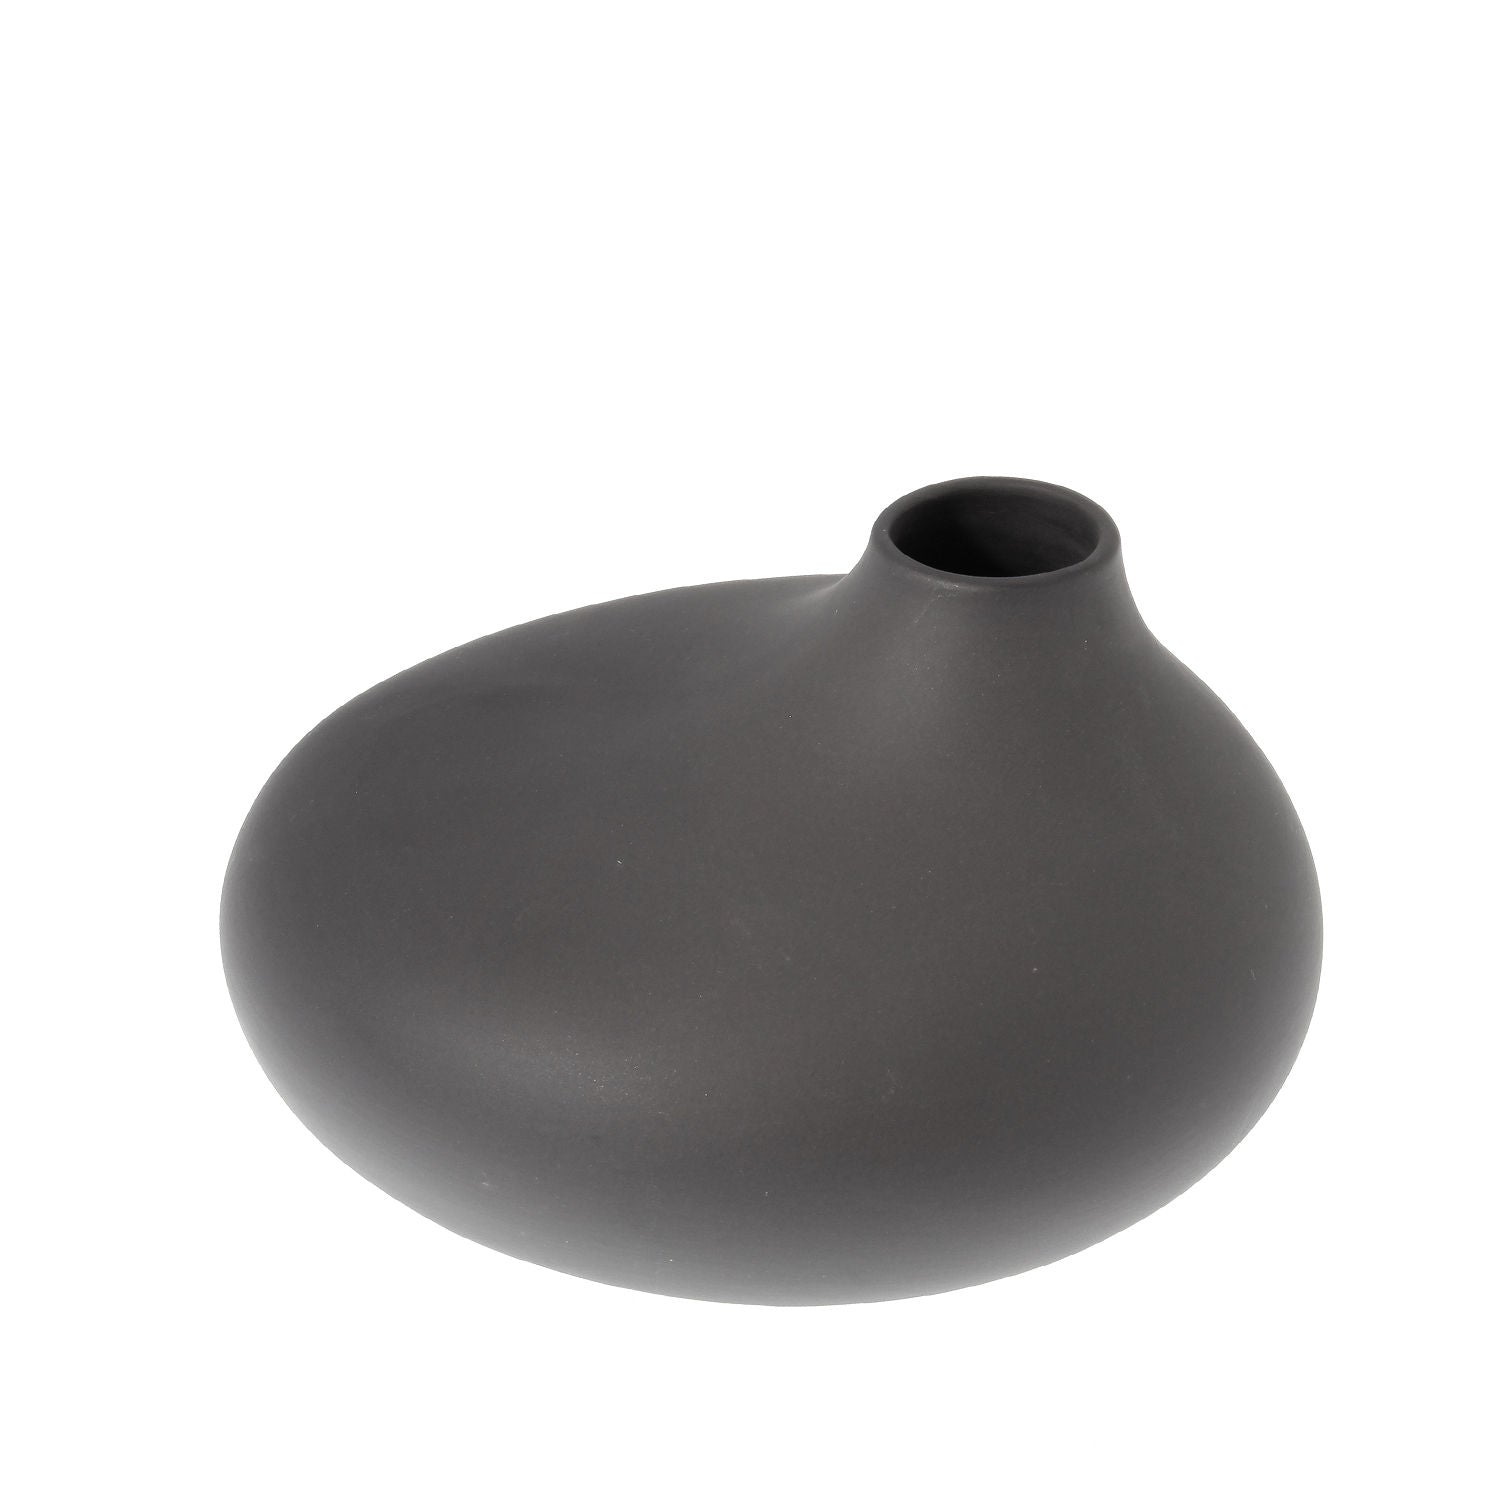 Storefactory Vase Källa Keramik flach anthrazit, monochrome-home Buxtehude